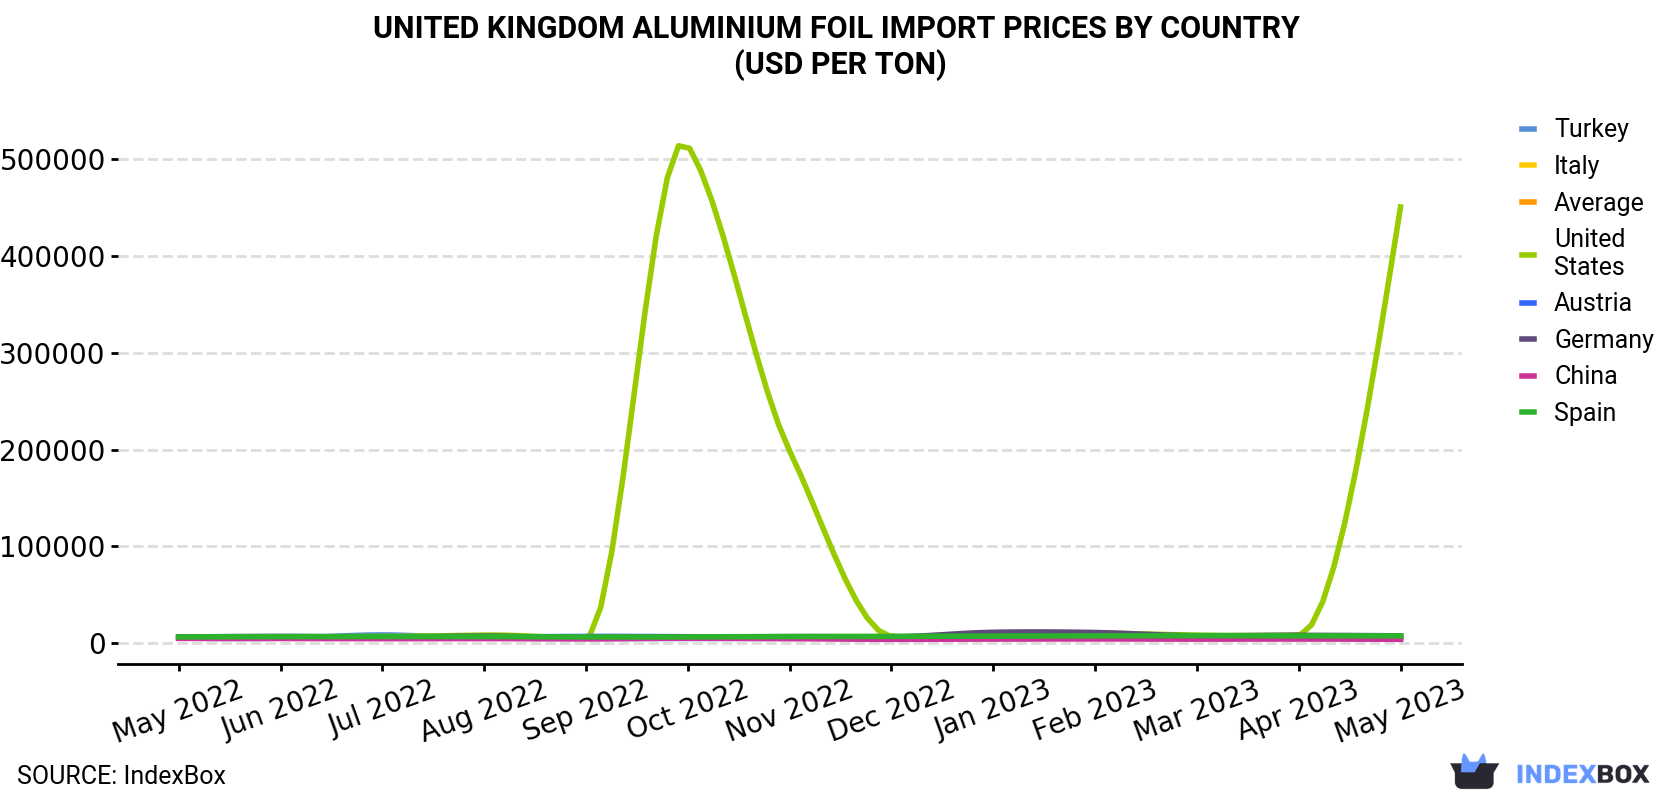 United Kingdom Aluminium Foil Import Prices By Country (USD Per Ton)